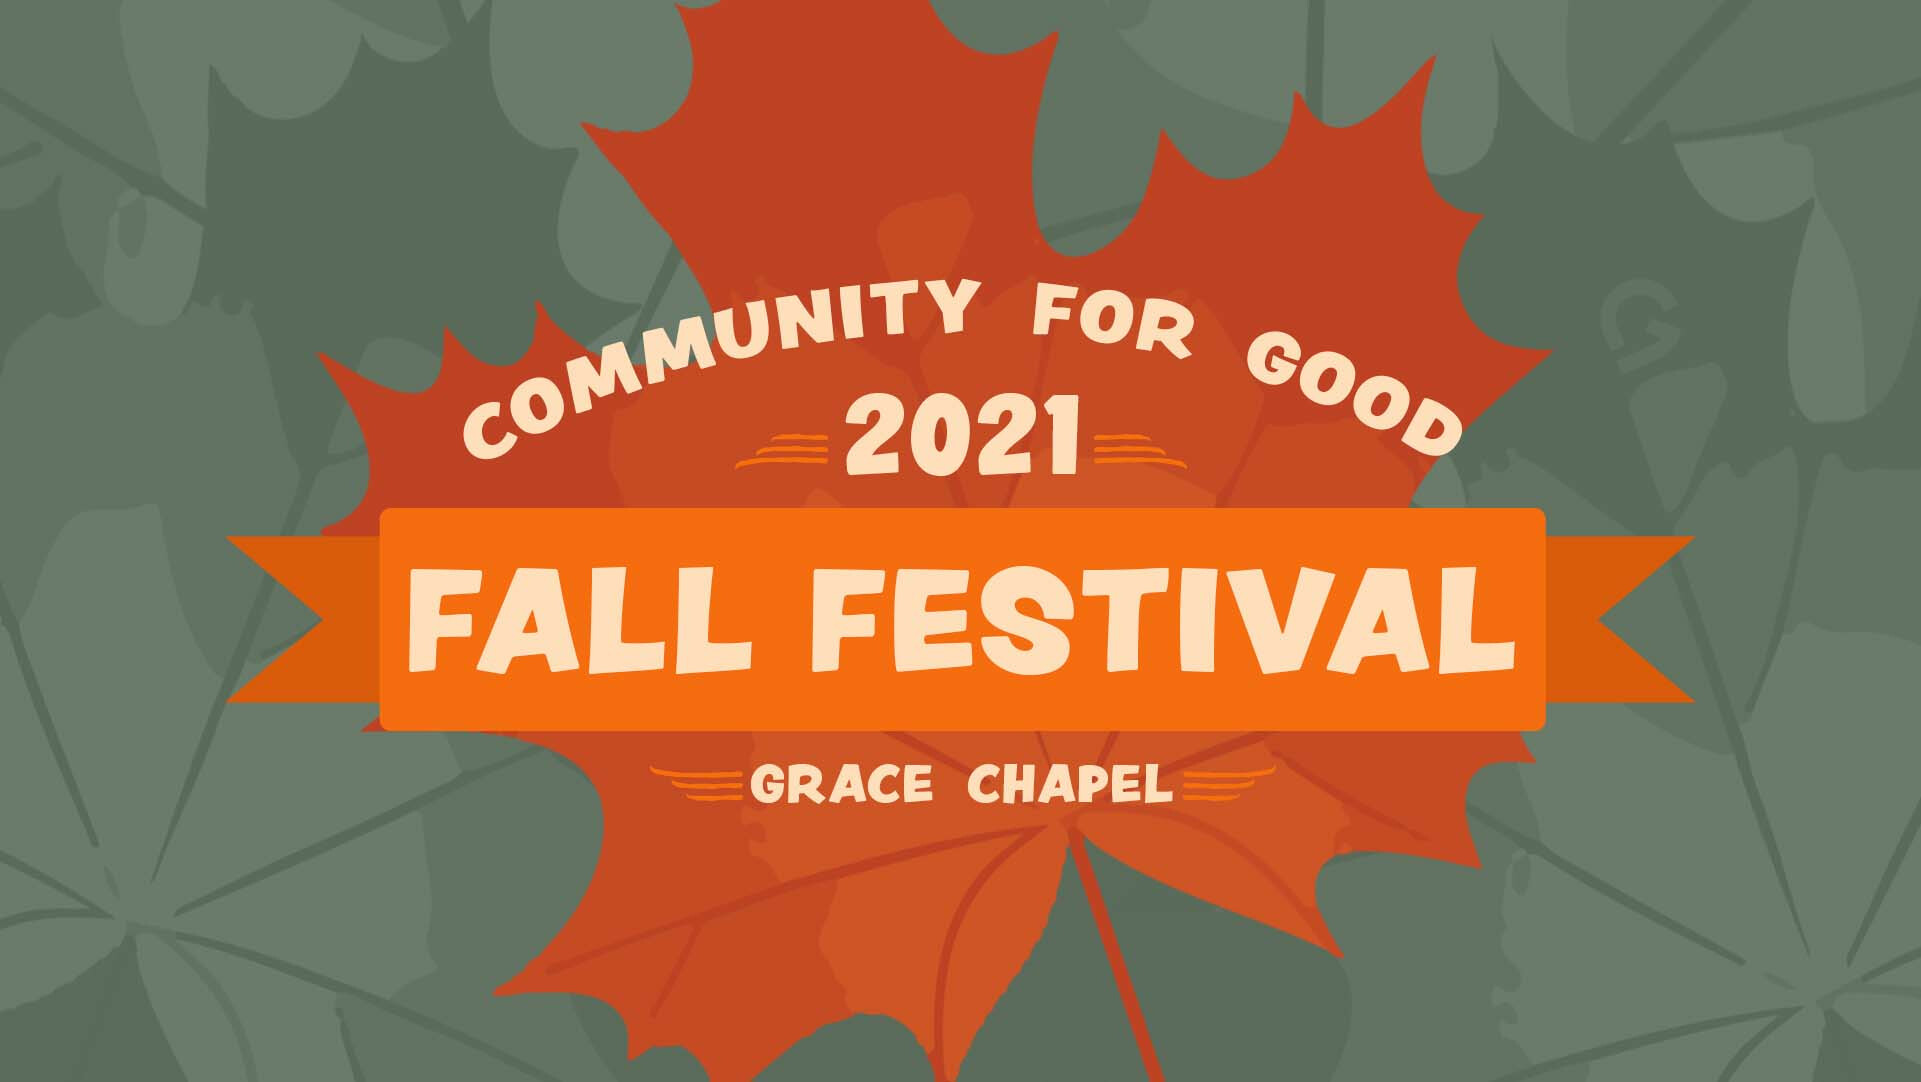 Watertown Campus Fall Festival 2021 | Grace Chapel